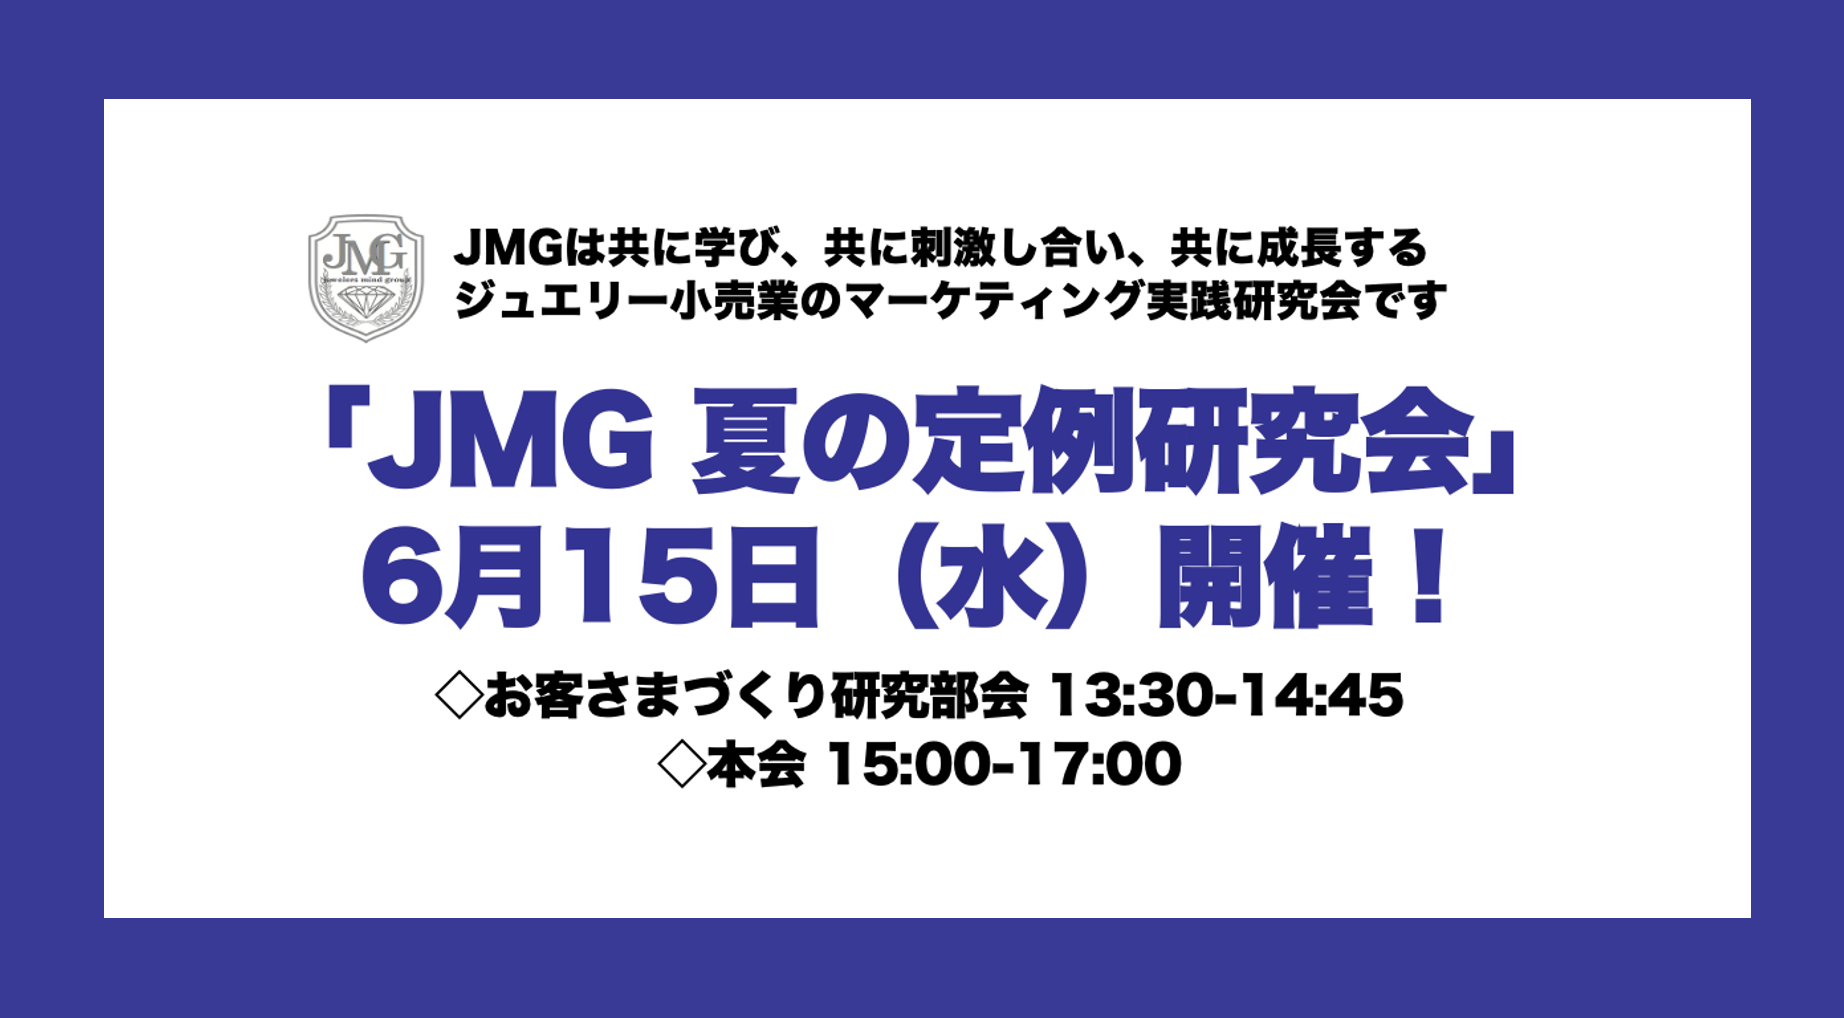 JMG定例研究会PR現代